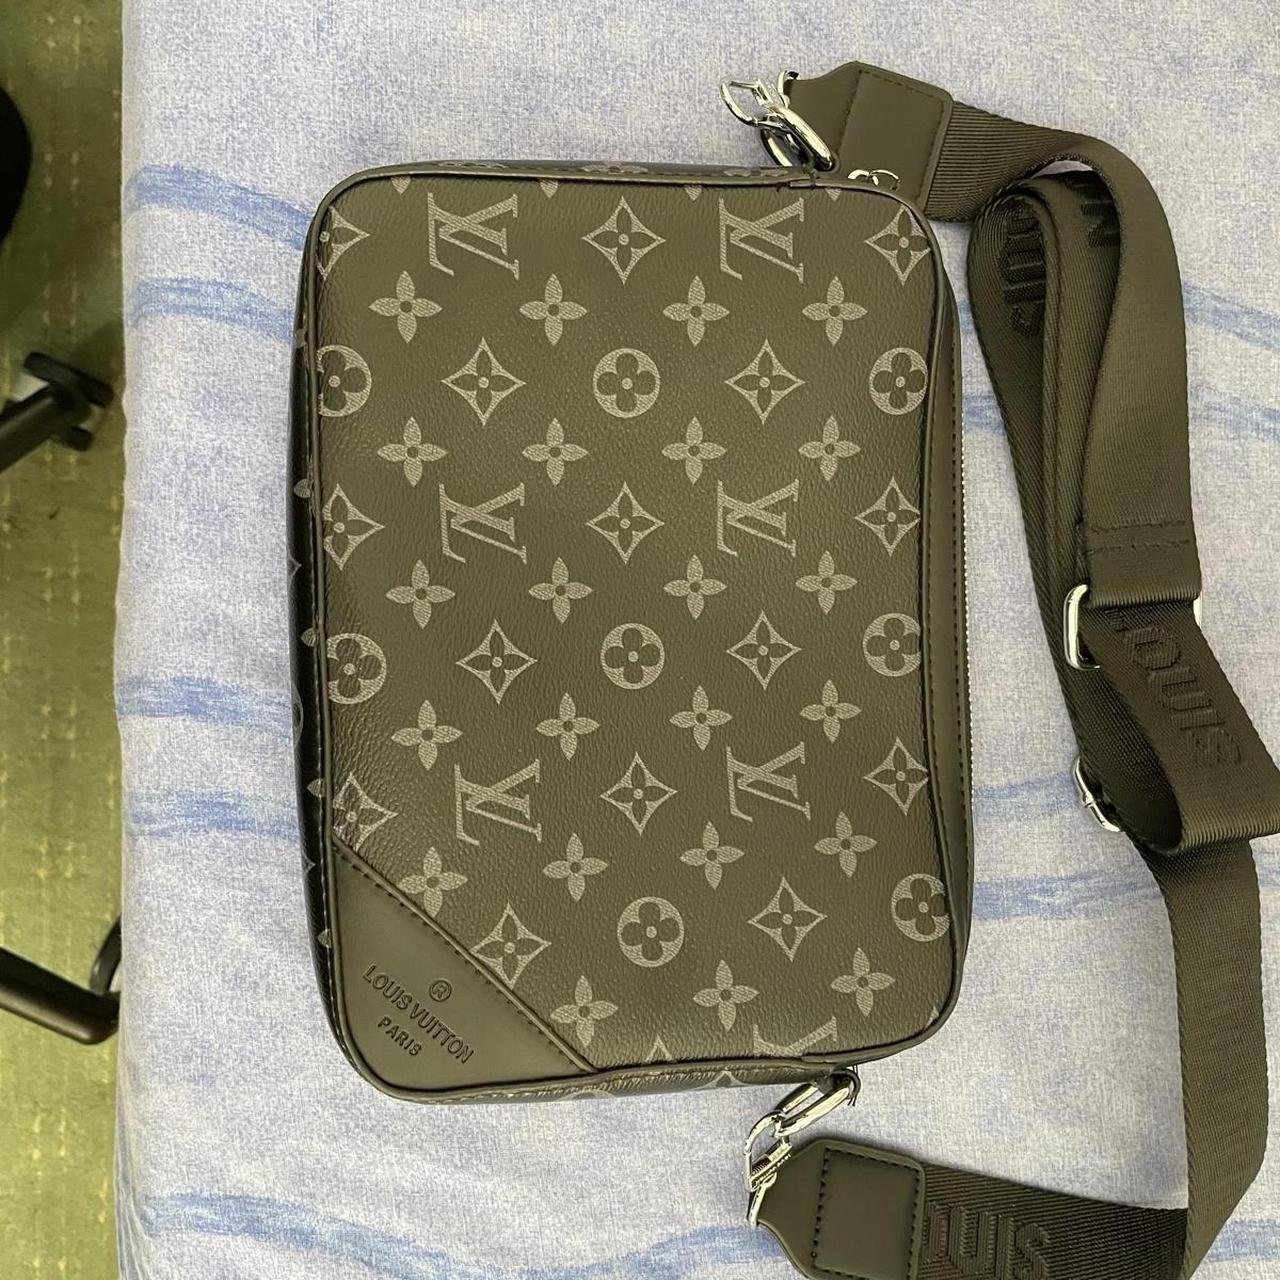 Louis Vuitton messenger bag with receipts dm for - Depop